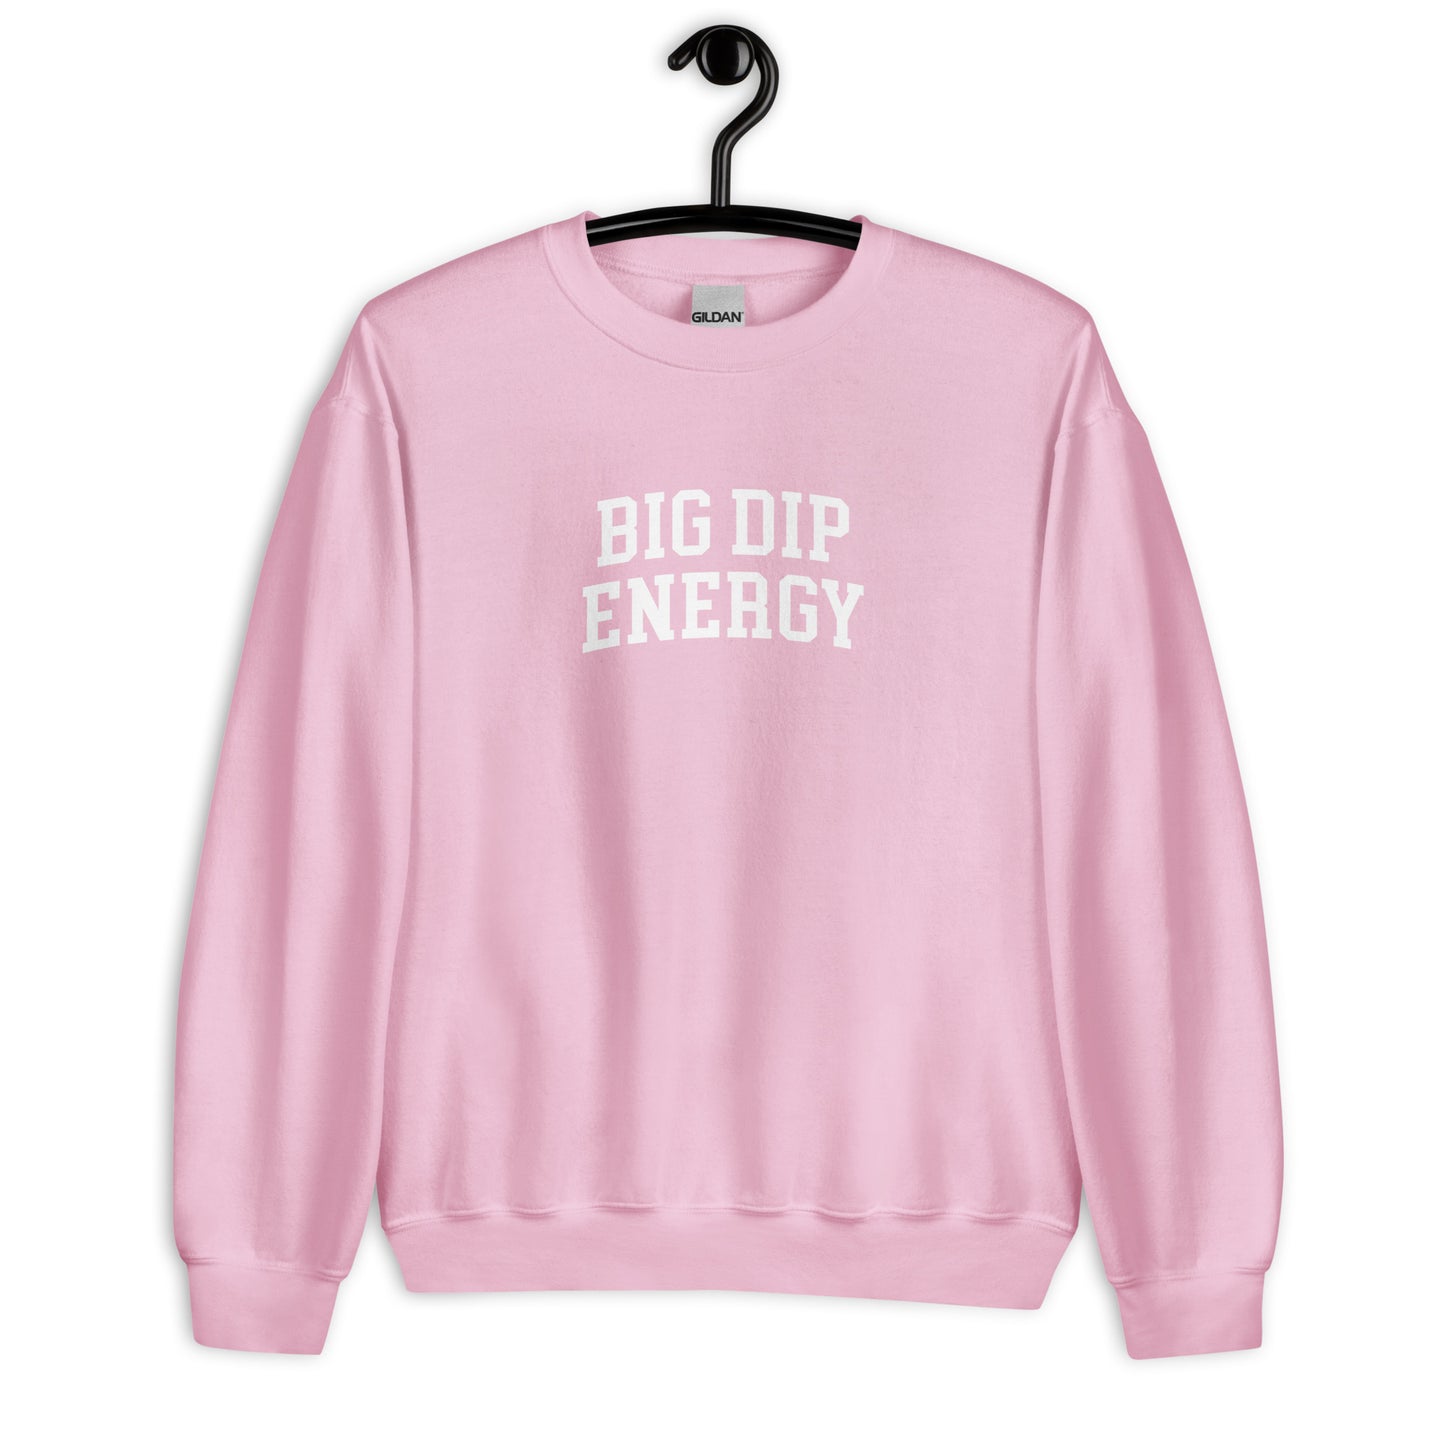 Big Dip Energy Sweatshirt - Arched Font